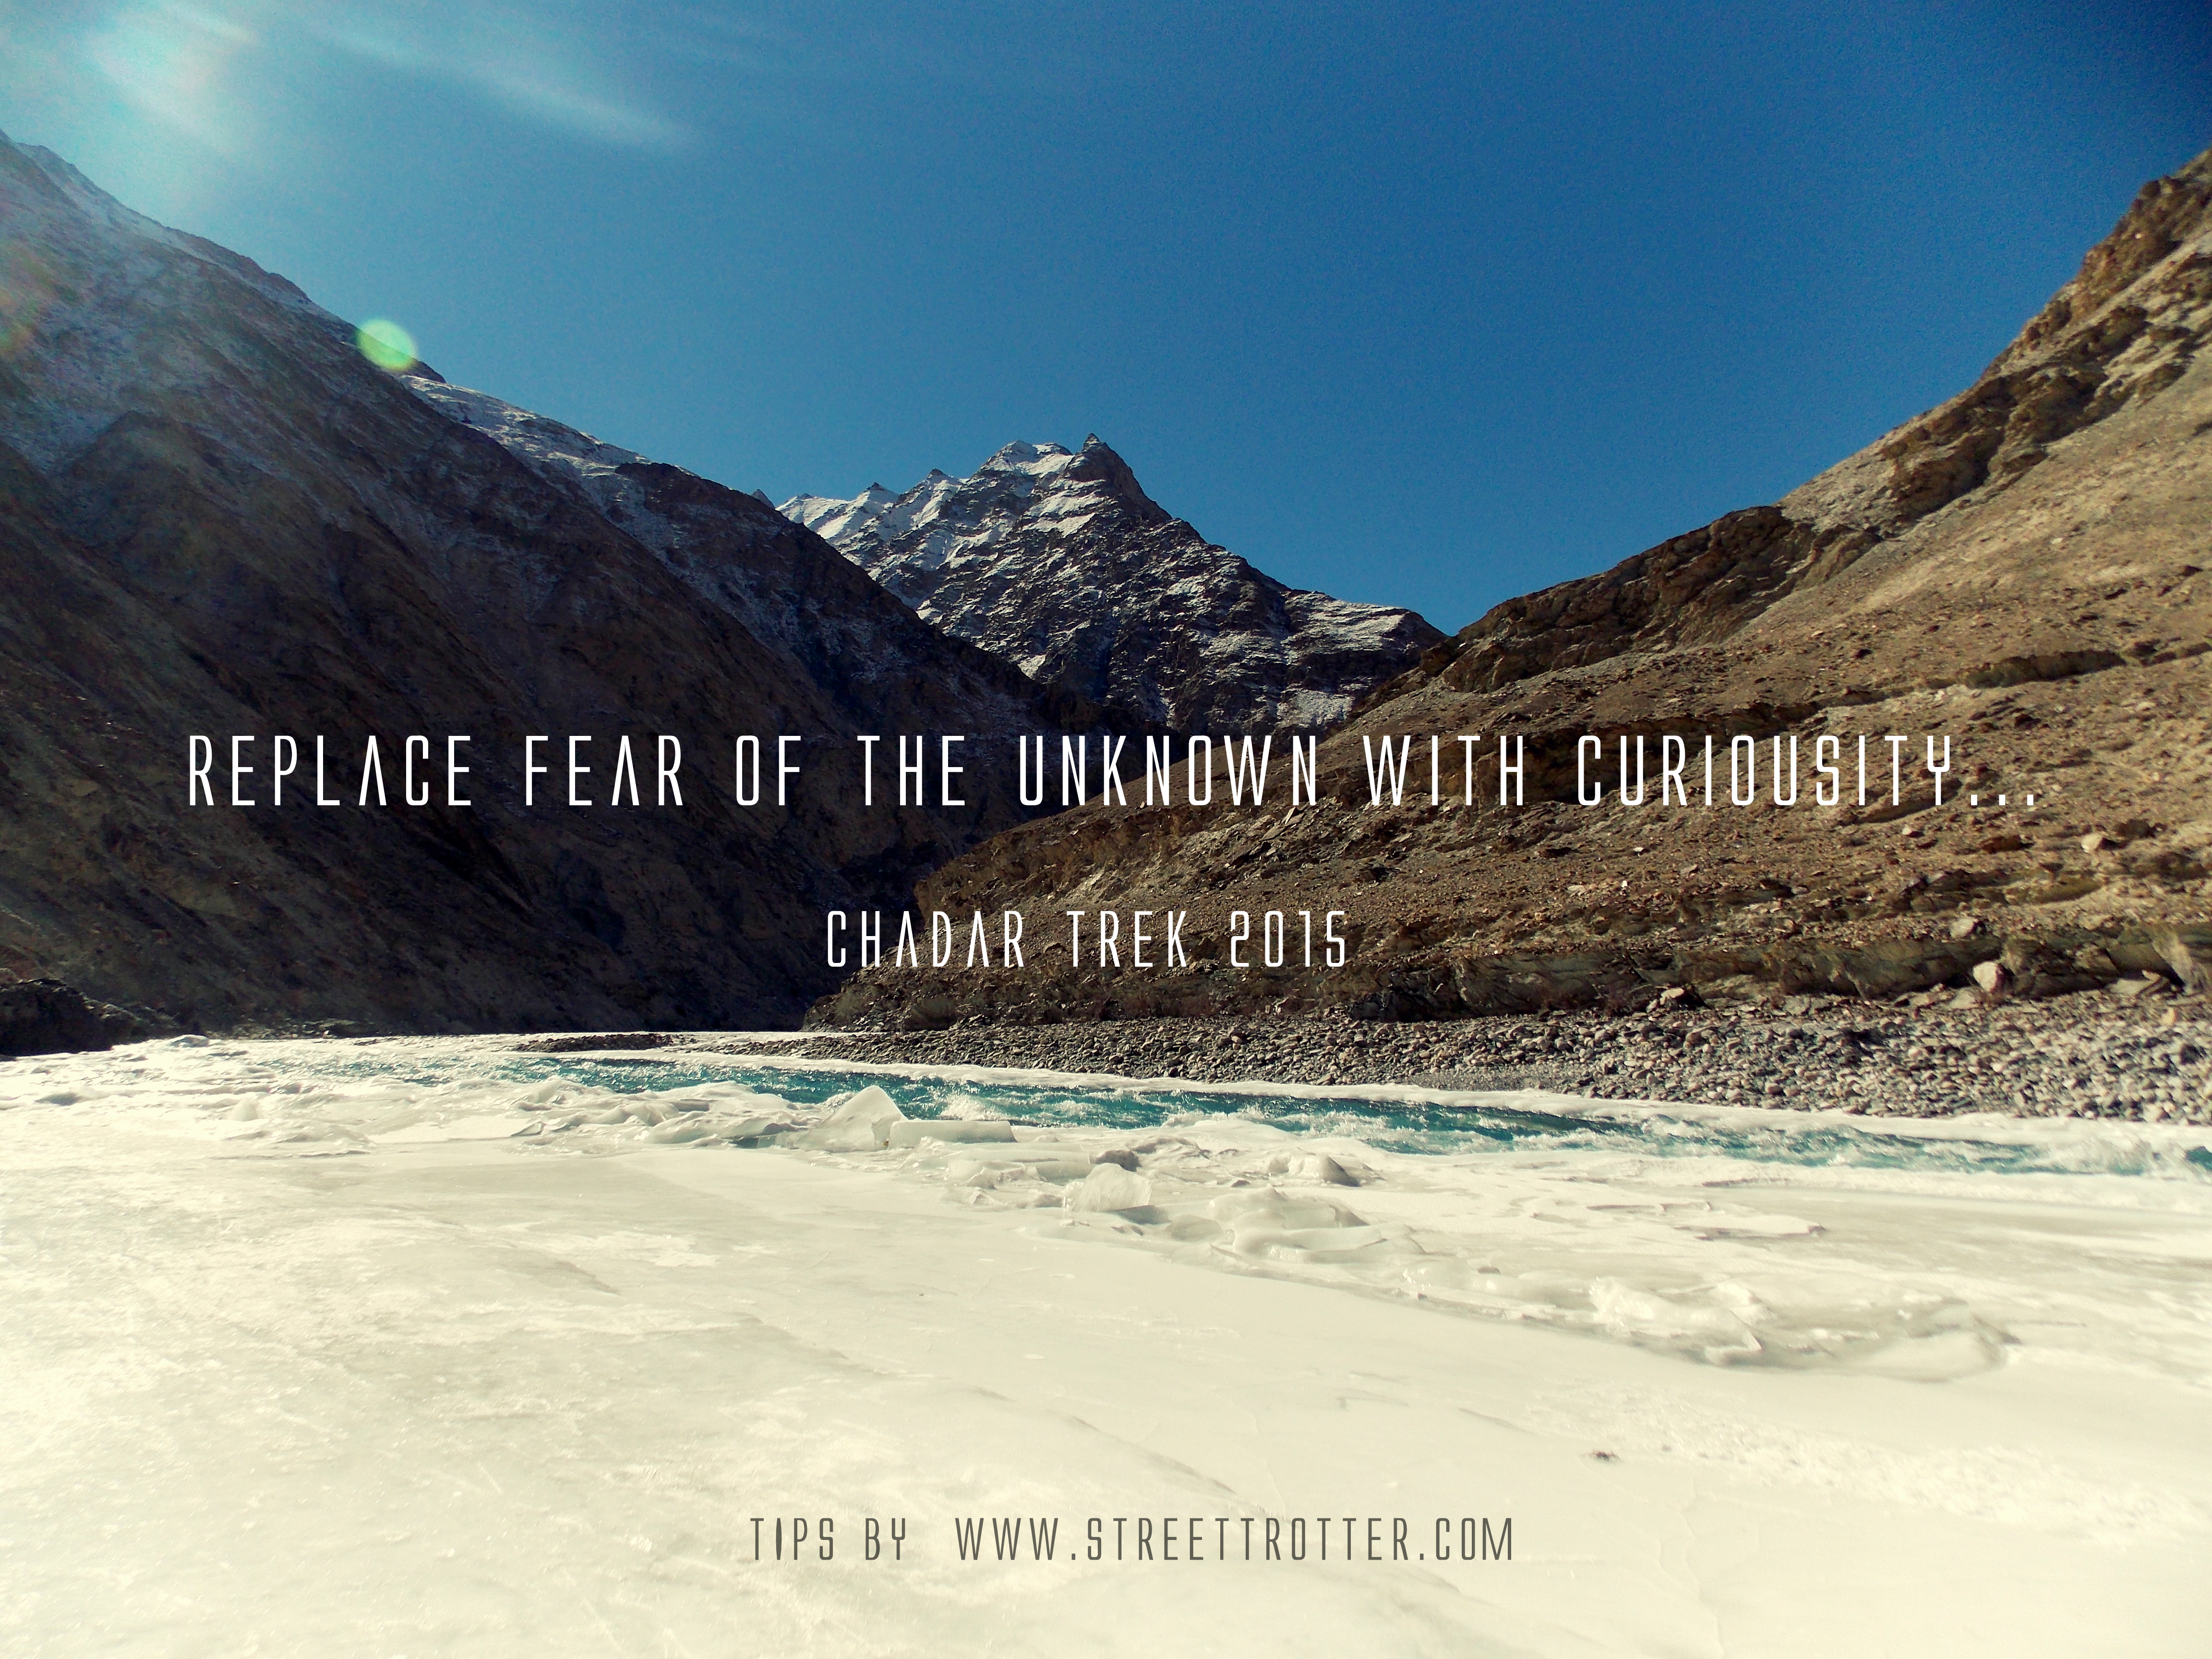 travel quote for chadar trek